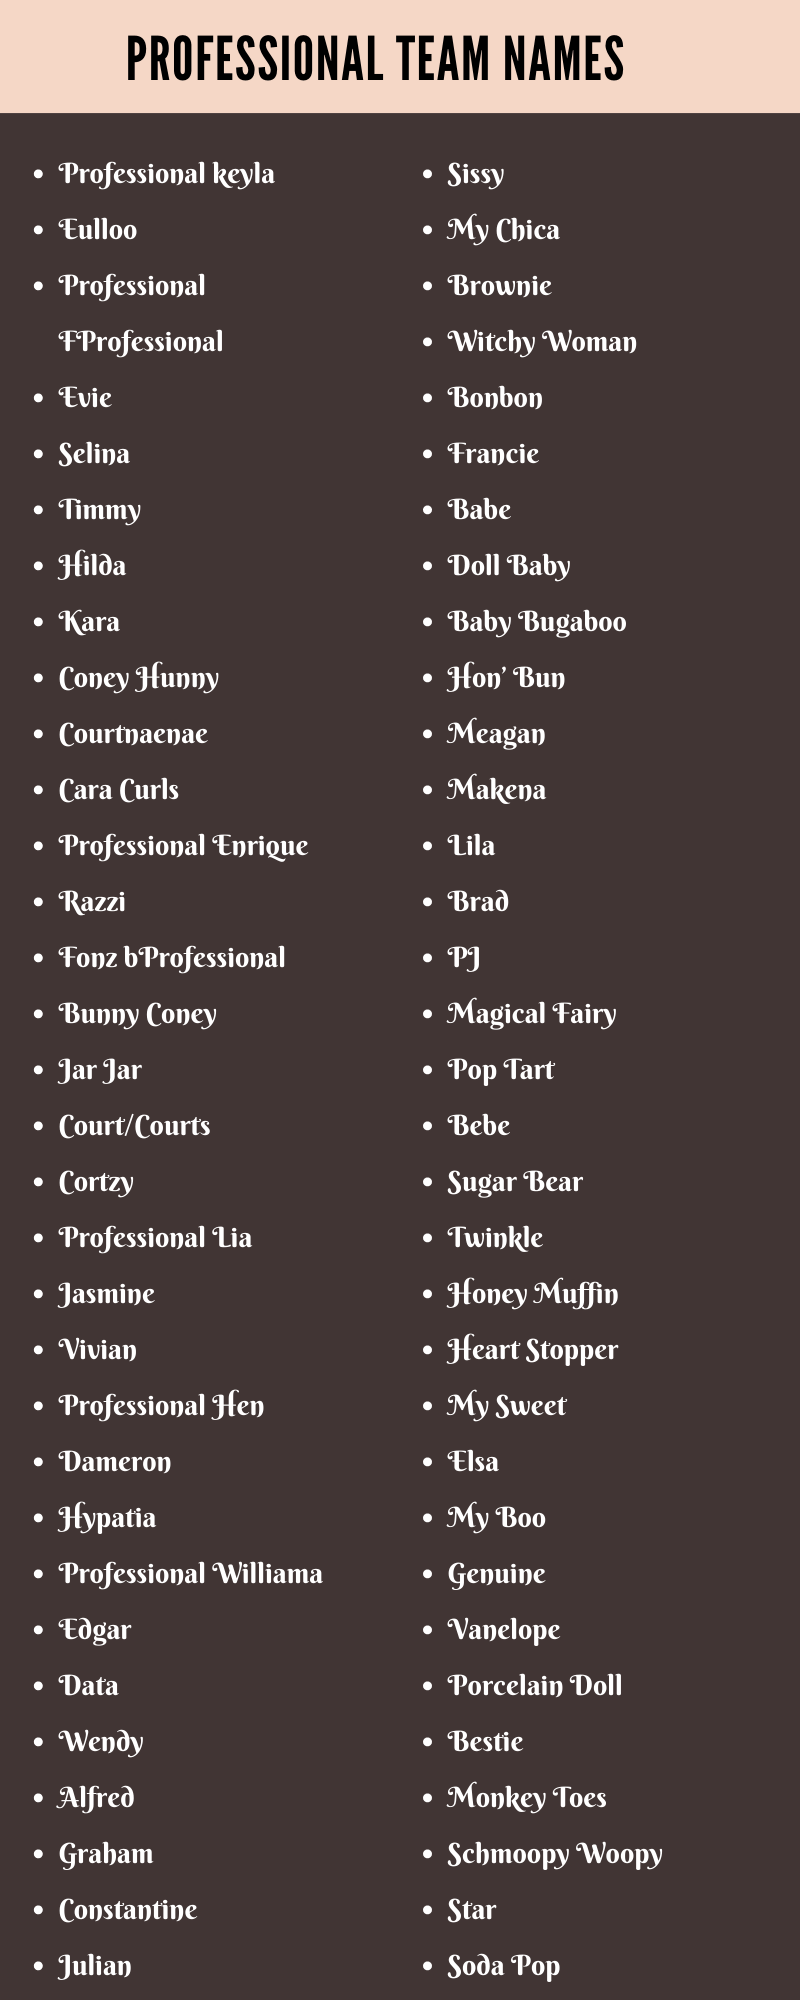 Professional Team Names